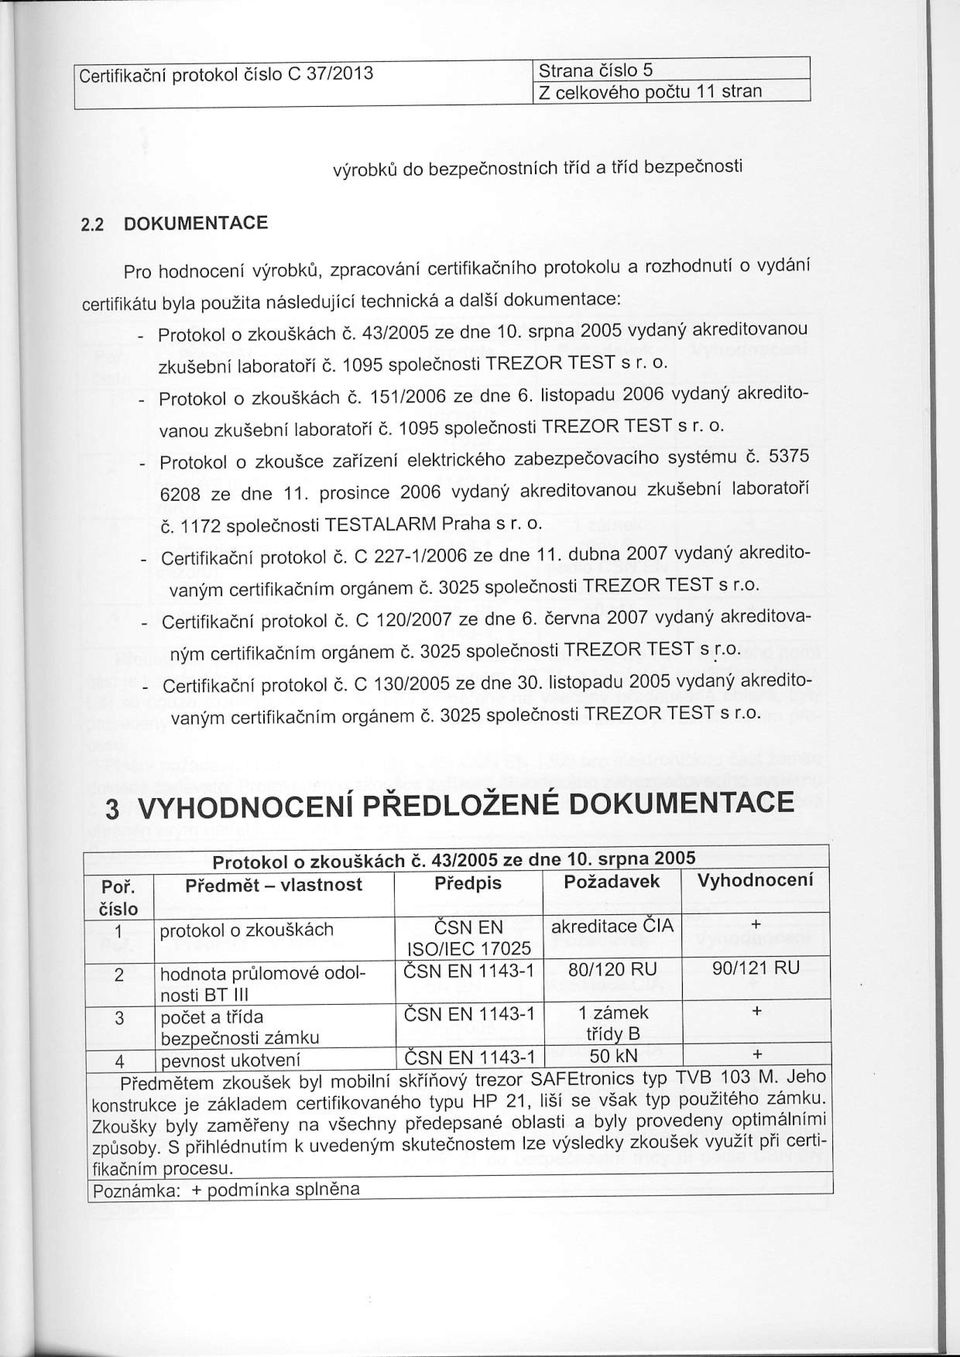 ze dne l0 srpna 2005 vydanj/ akreditovanou zkuaebni laboratofi a. 1095 spolednosti TREZOR TEST s r' o - Protokol o zkouskach a.